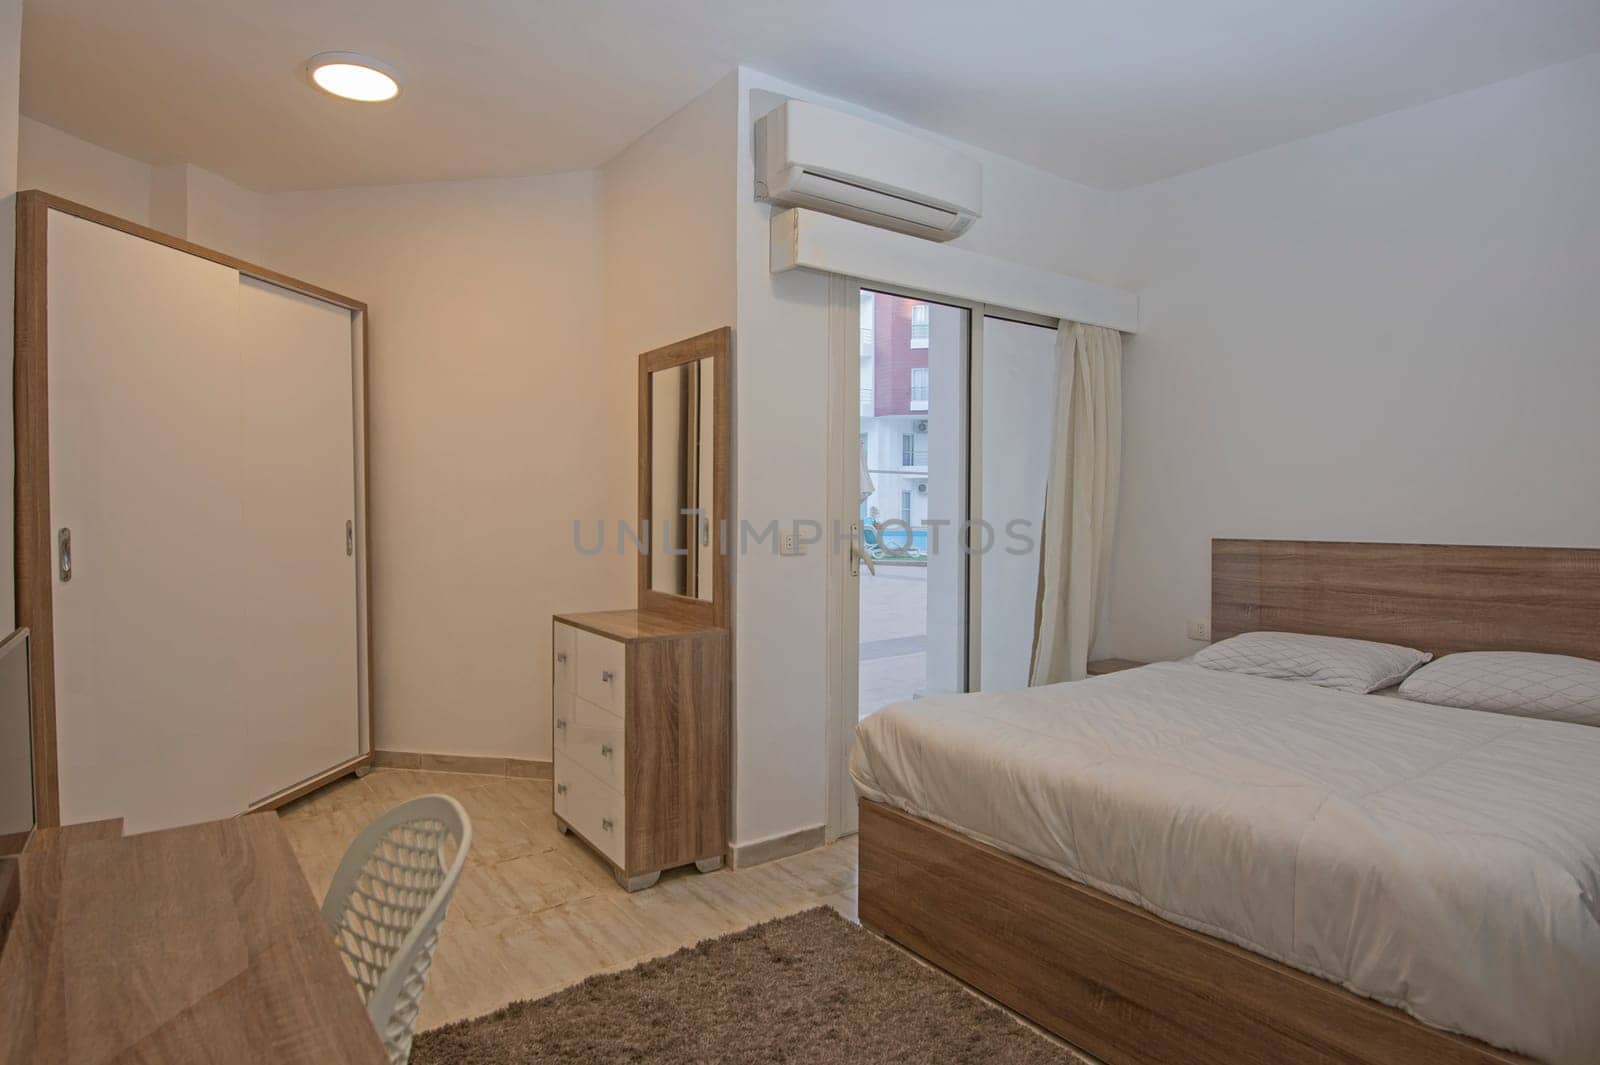 Interior design of bedroom in apartment with balcony by paulvinten